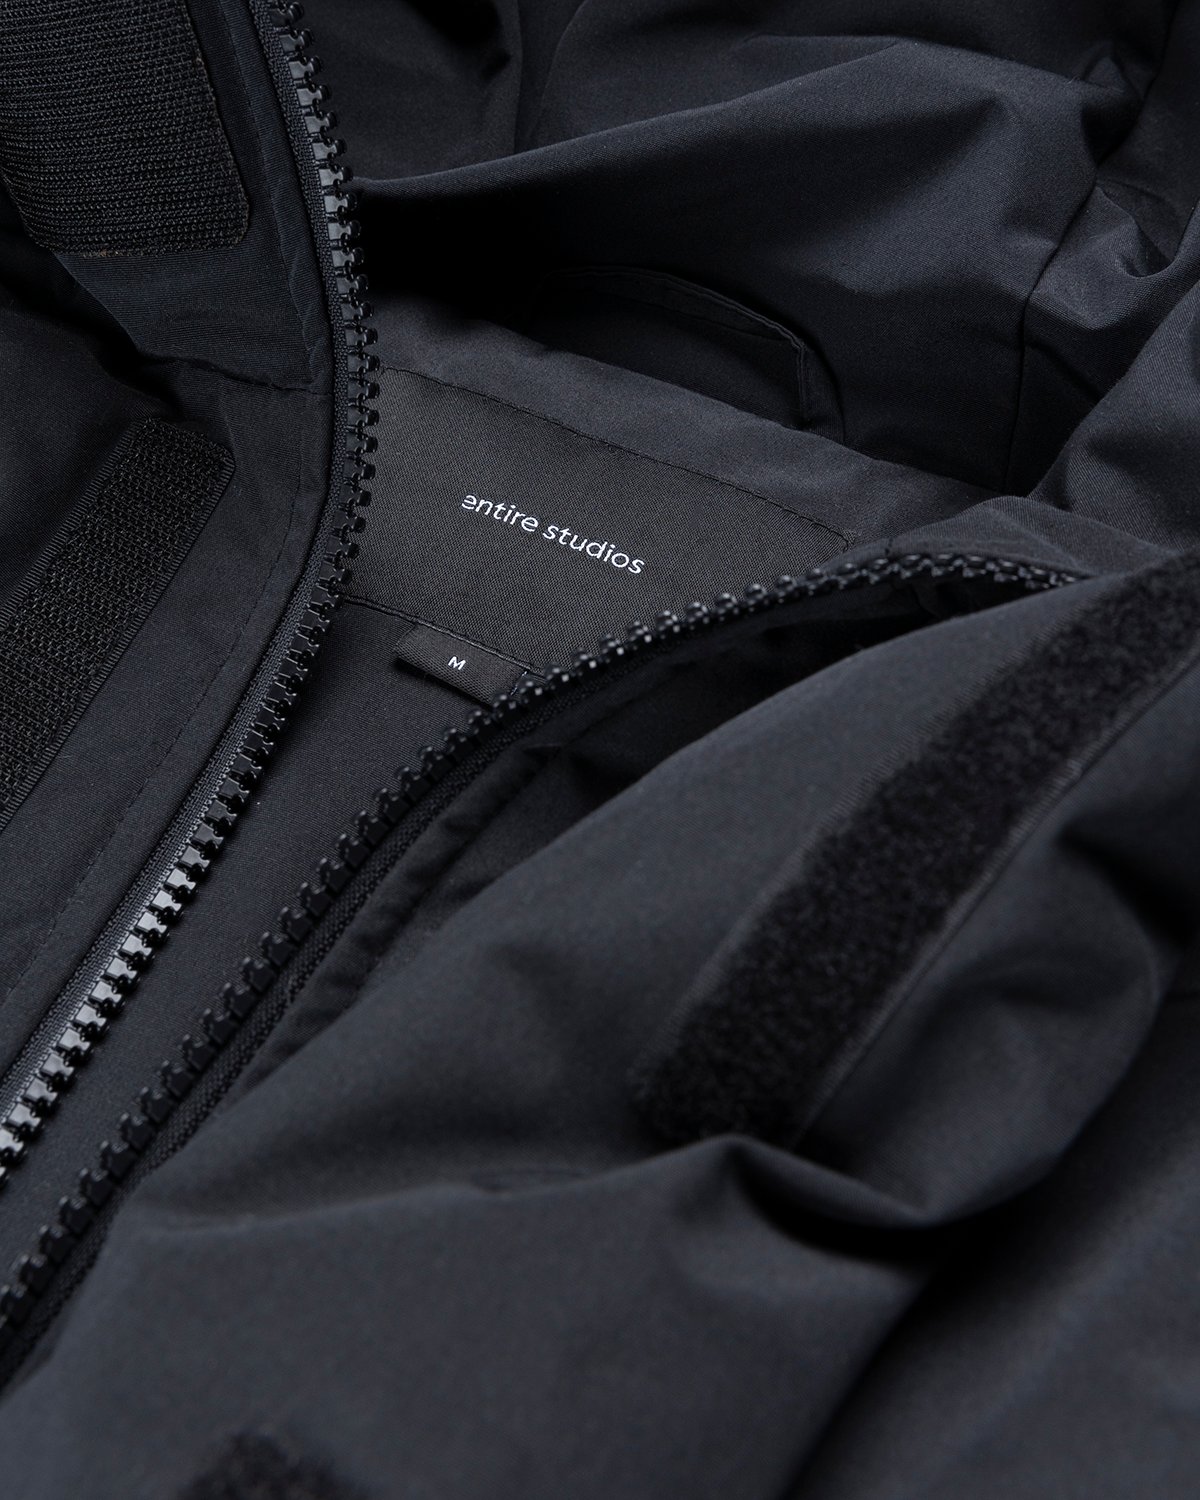 Entire Studios - SOA Puffer Jacket Soot - Clothing - Black - Image 4